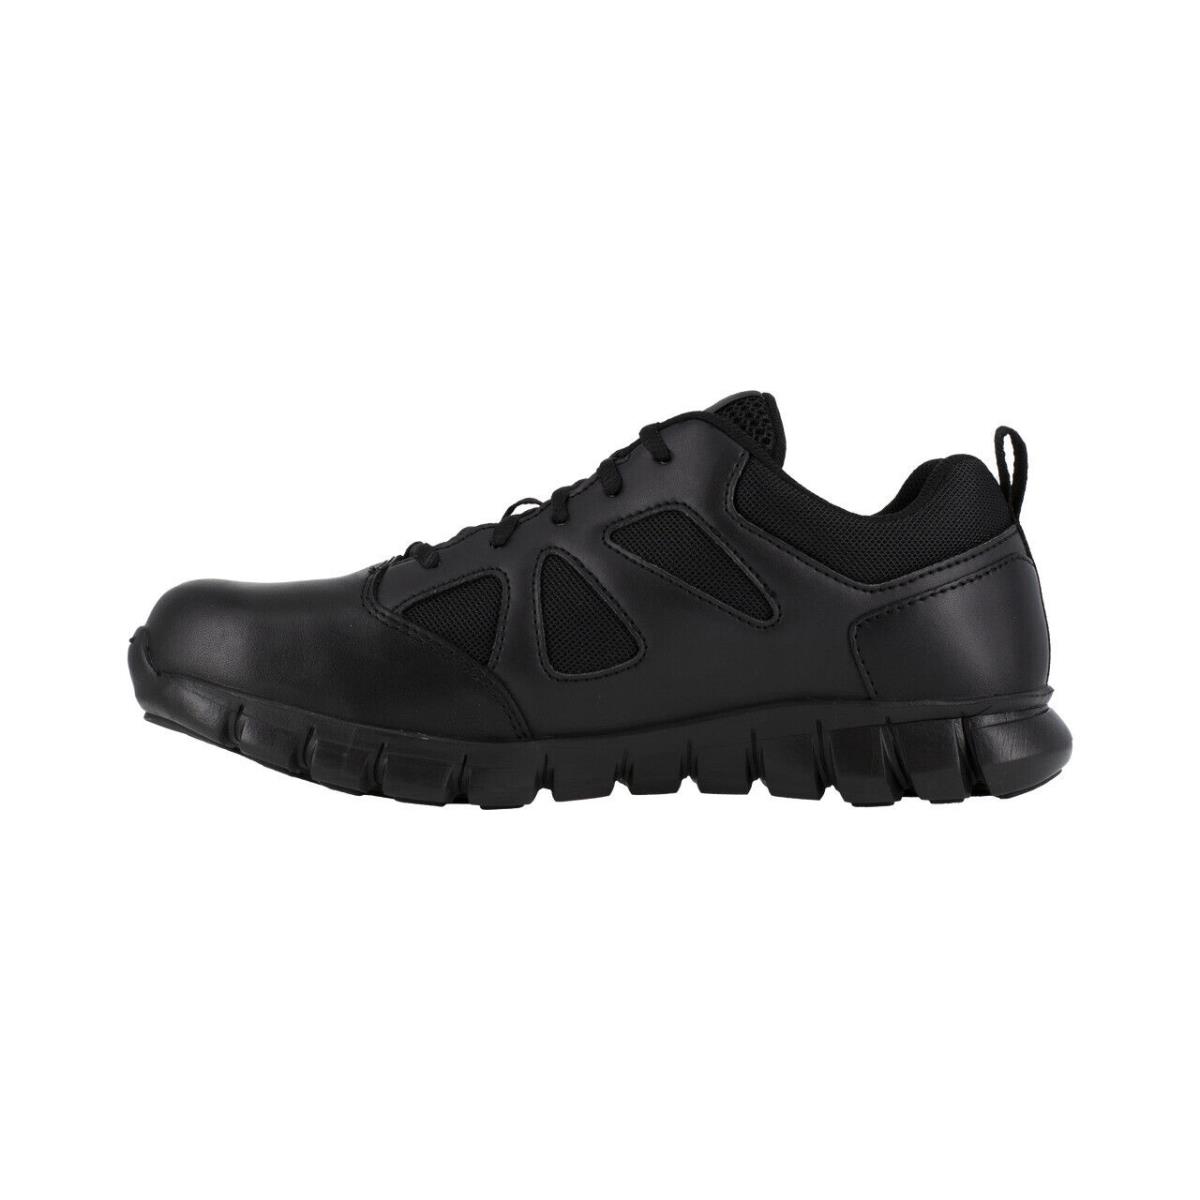 Reebok Sublite Cushion Tactical Men`s Shoe Black Boots RB8105 - All Sizes